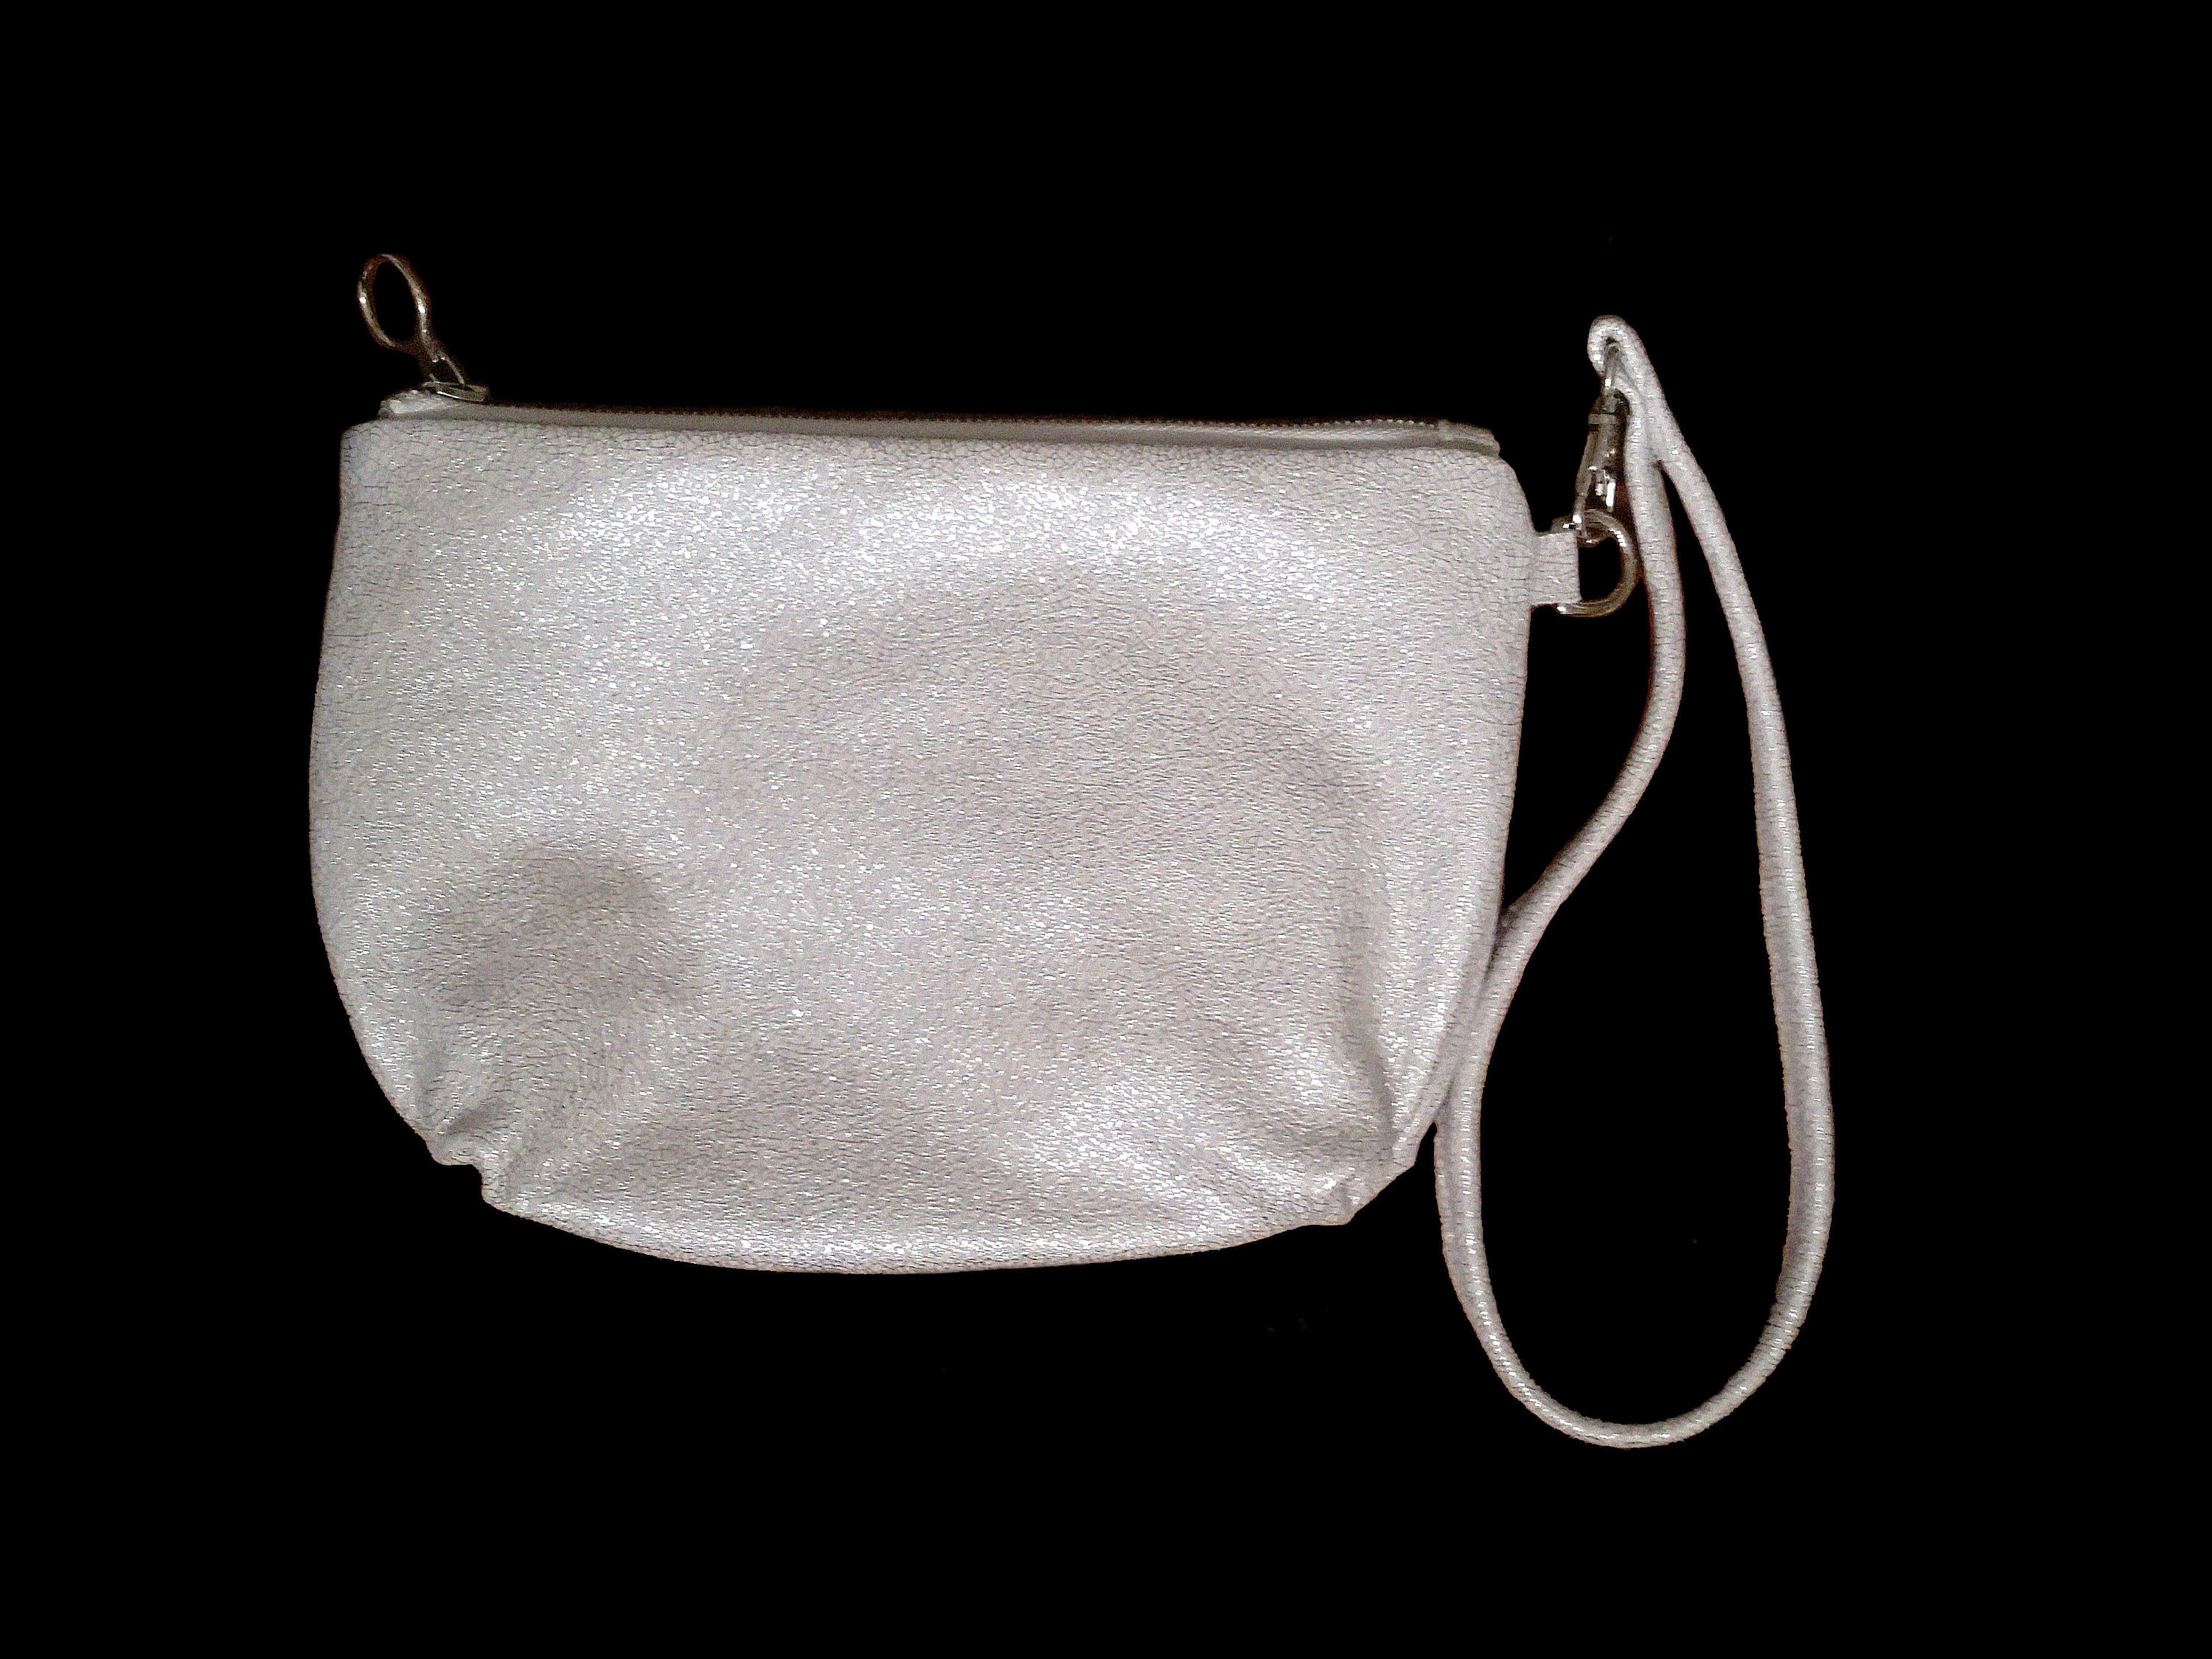 4Pcs Silver Clutch Bag Jewelry Set For Women Rhinestone Shiny Evening Purse  Handbag Clutches Purses For Wedding Party Gift (Beautiful Style): Handbags:  Amazon.com